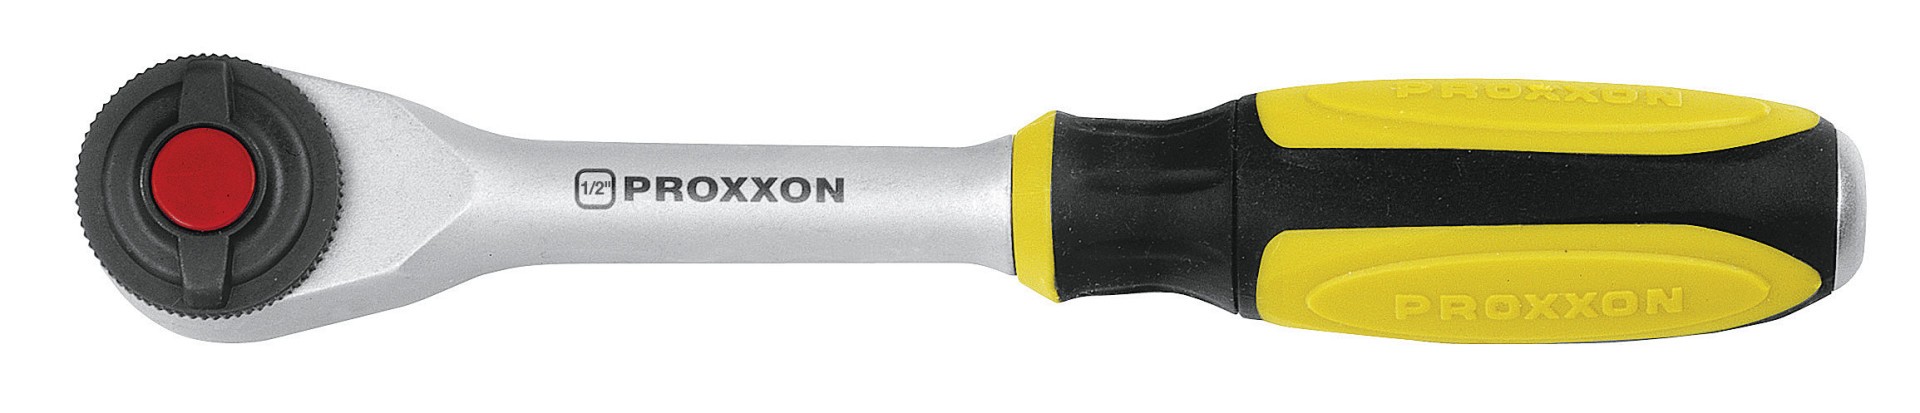 PROXXON Rotary Ratsche 1/4 Zoll (23082)